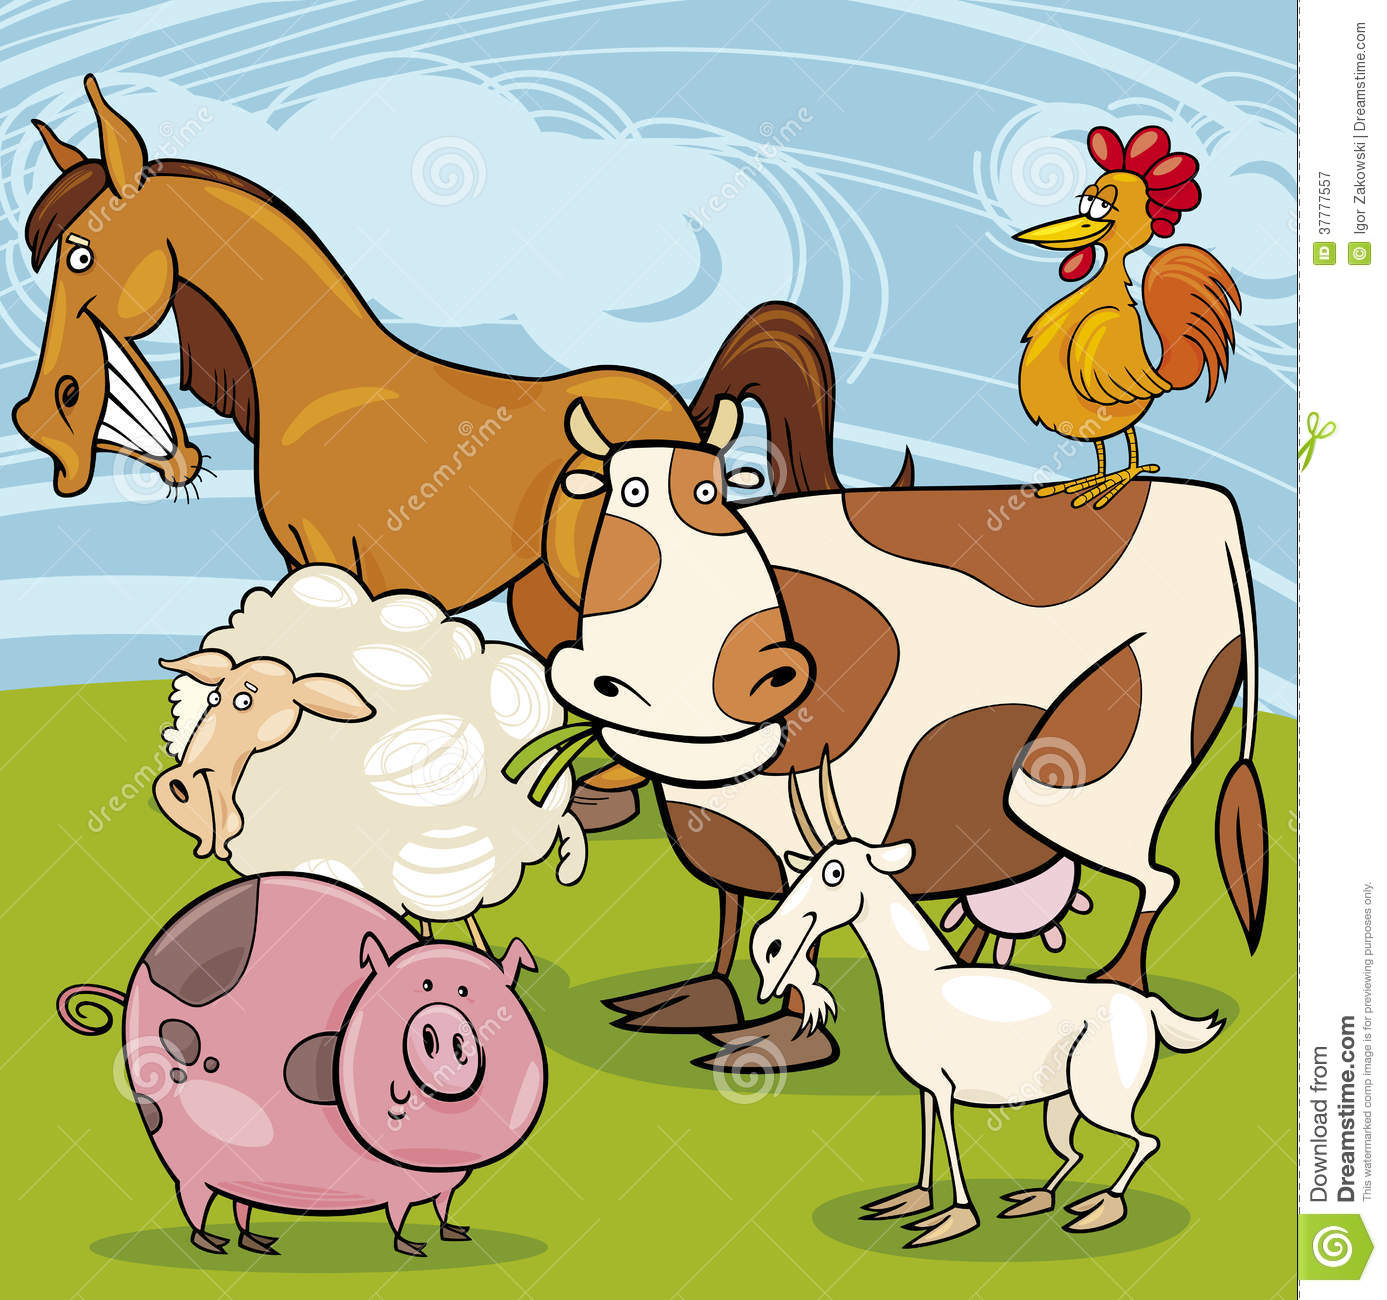 Farm Animals Cartoon Group Royalty Free Stock Photography   Image